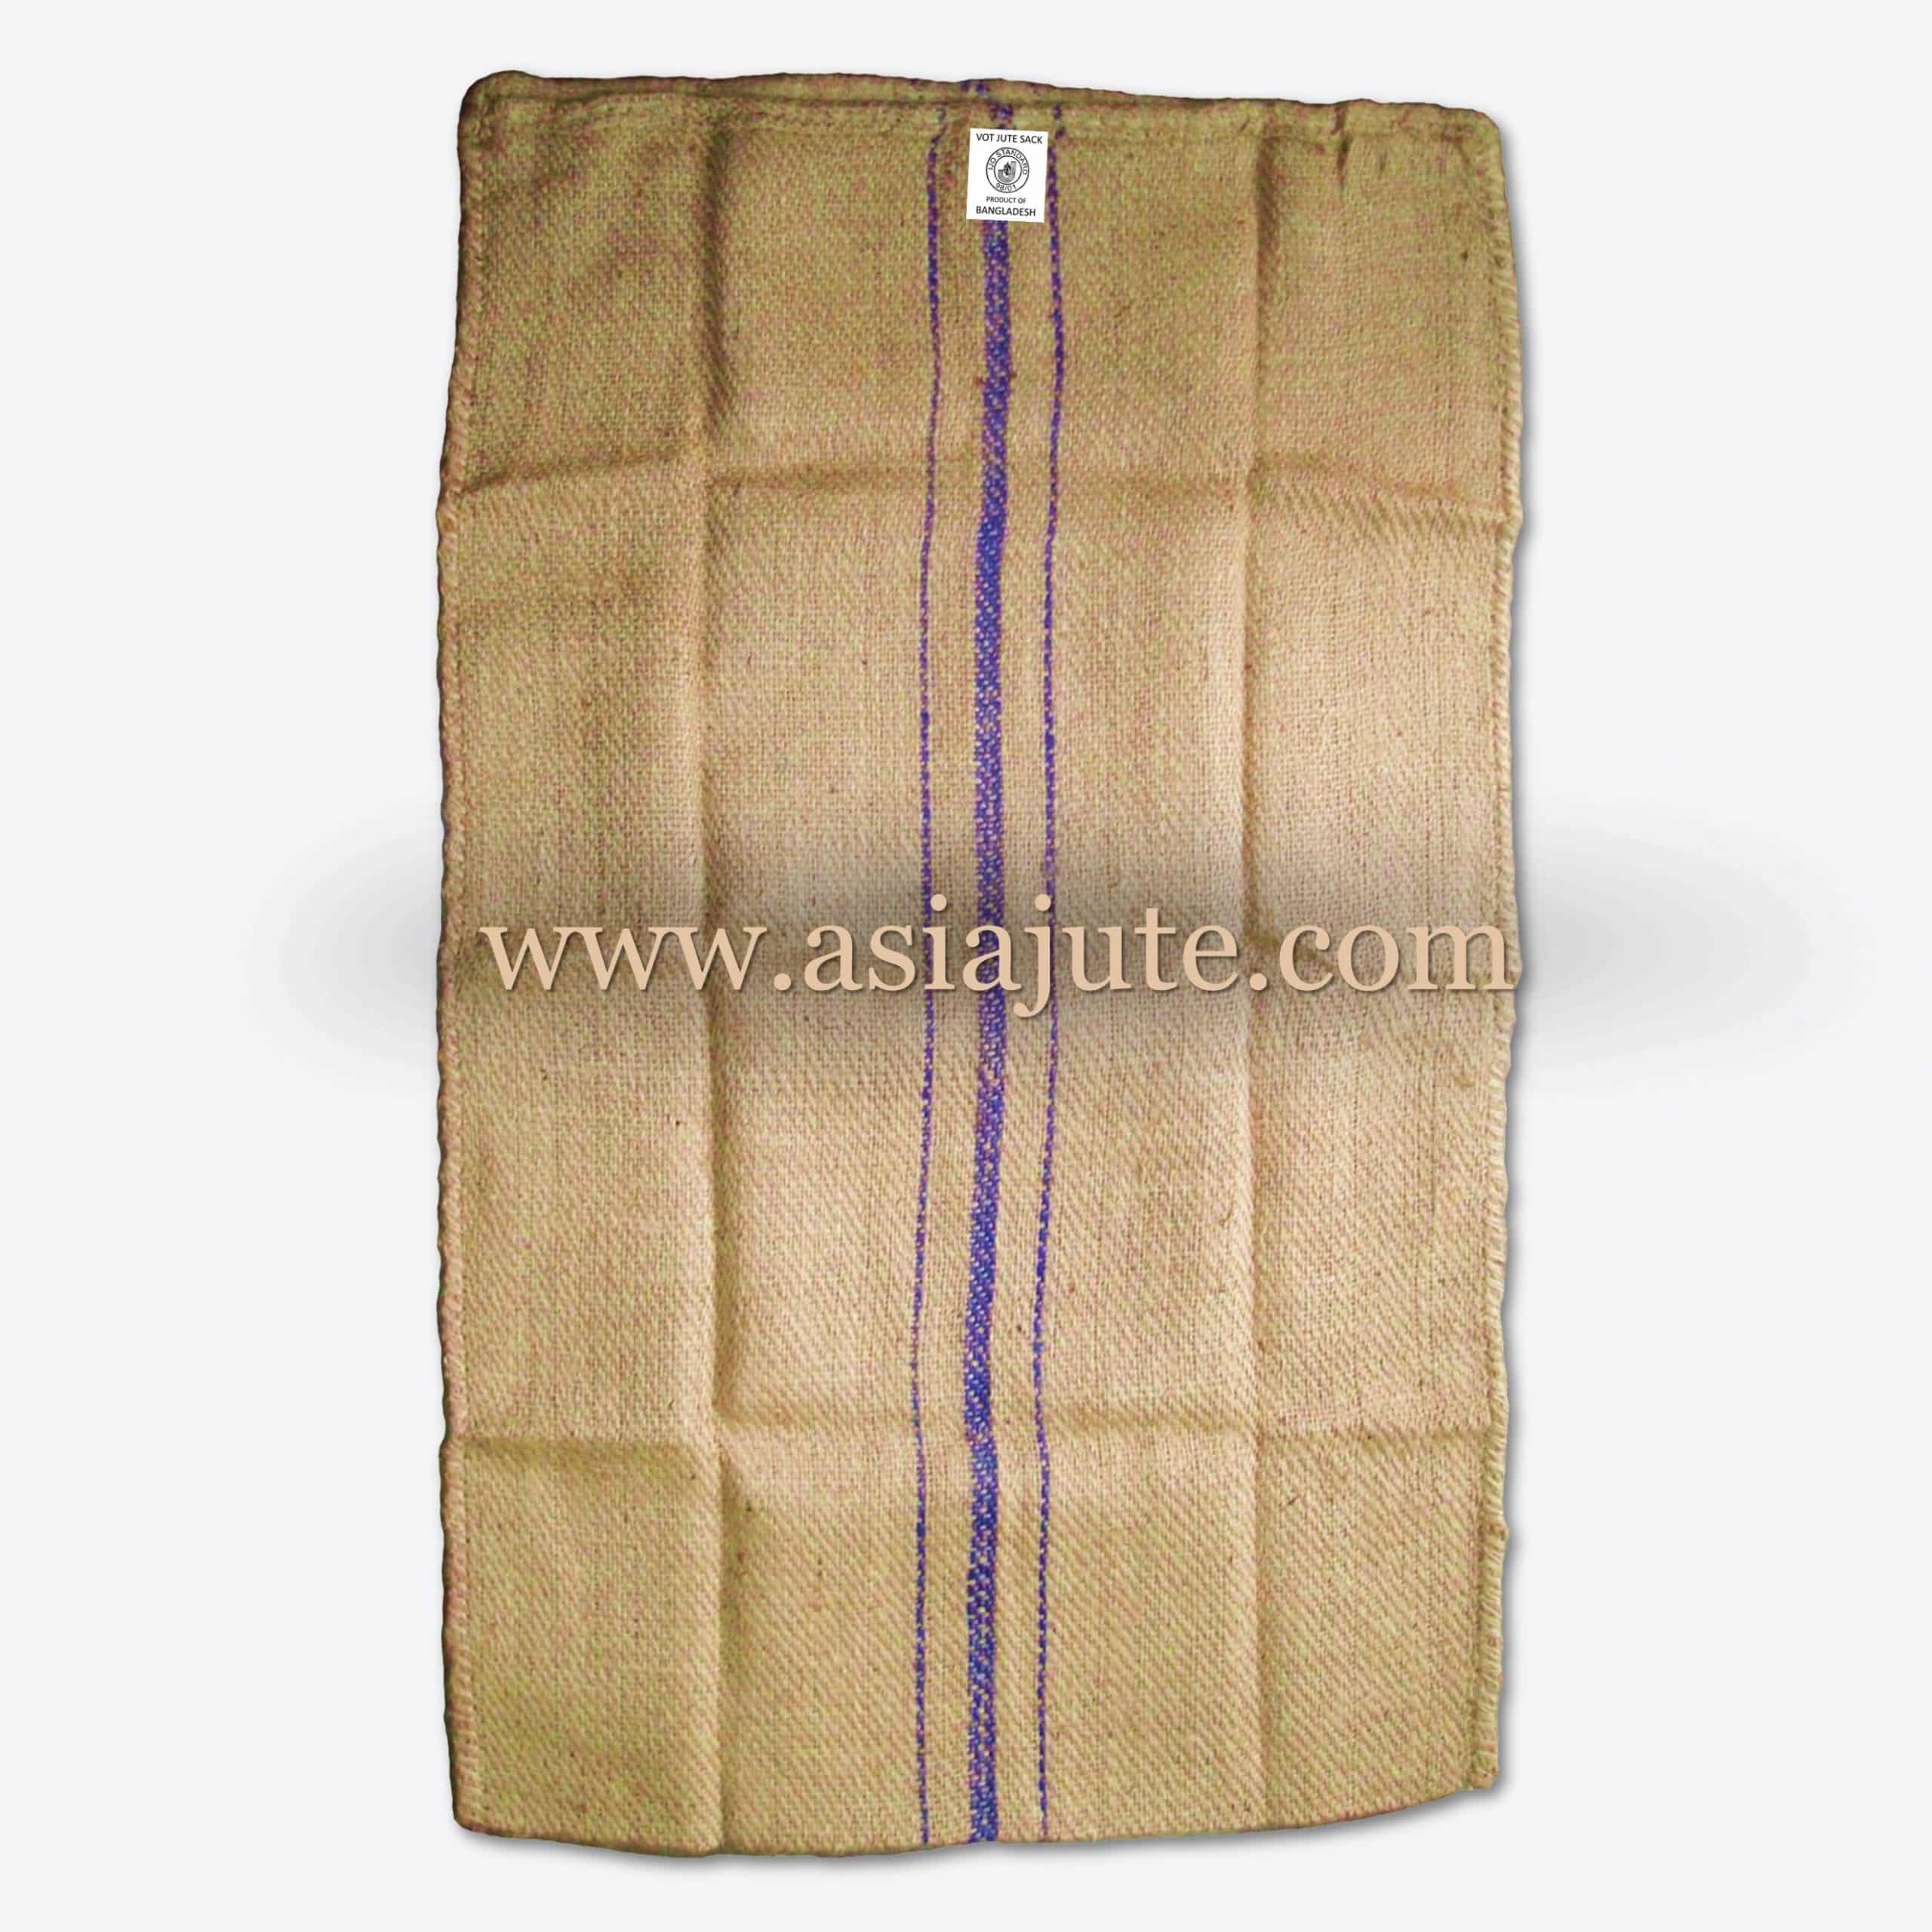 VOT A-Twill Jute Bag Manufacturer Exporter Wholesale Bangladesh Jute Bag Supplier